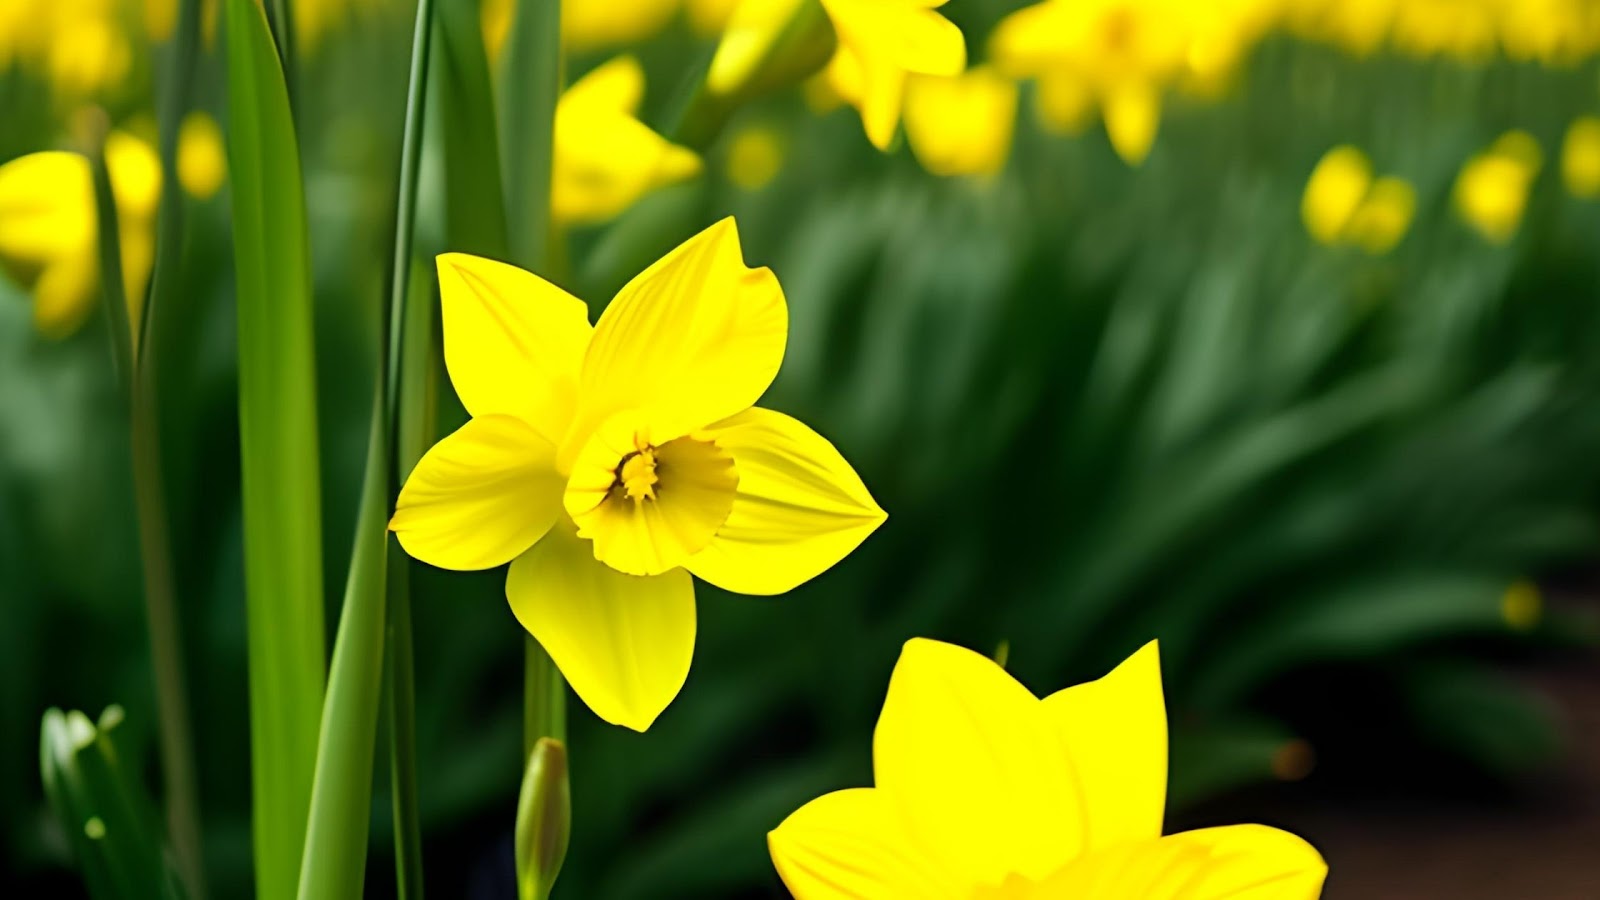 Feilds Of Daffodils growing